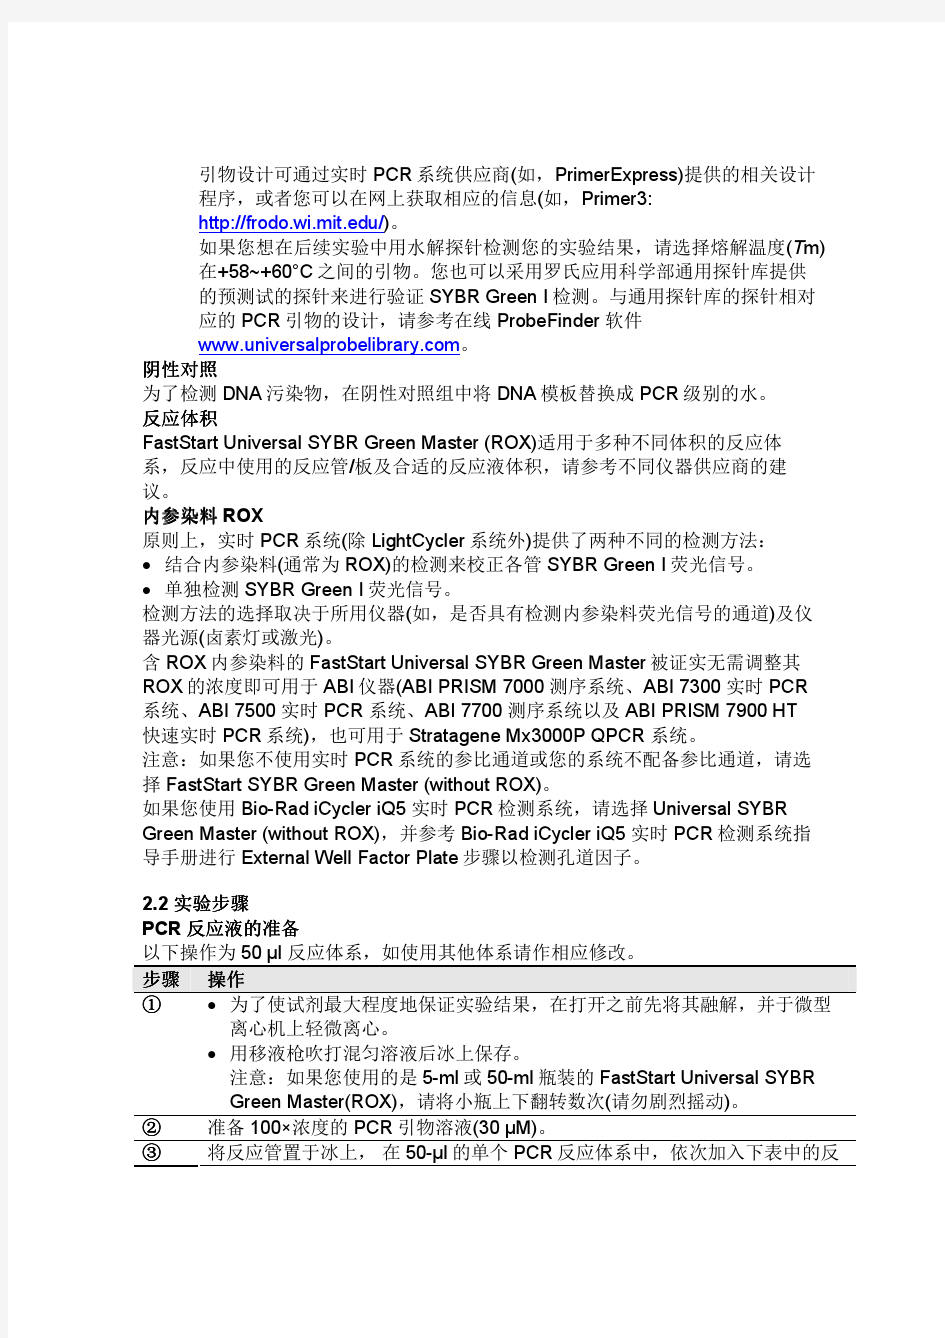 FastStart Universal SYBR Green Master(ROX)中文说明书